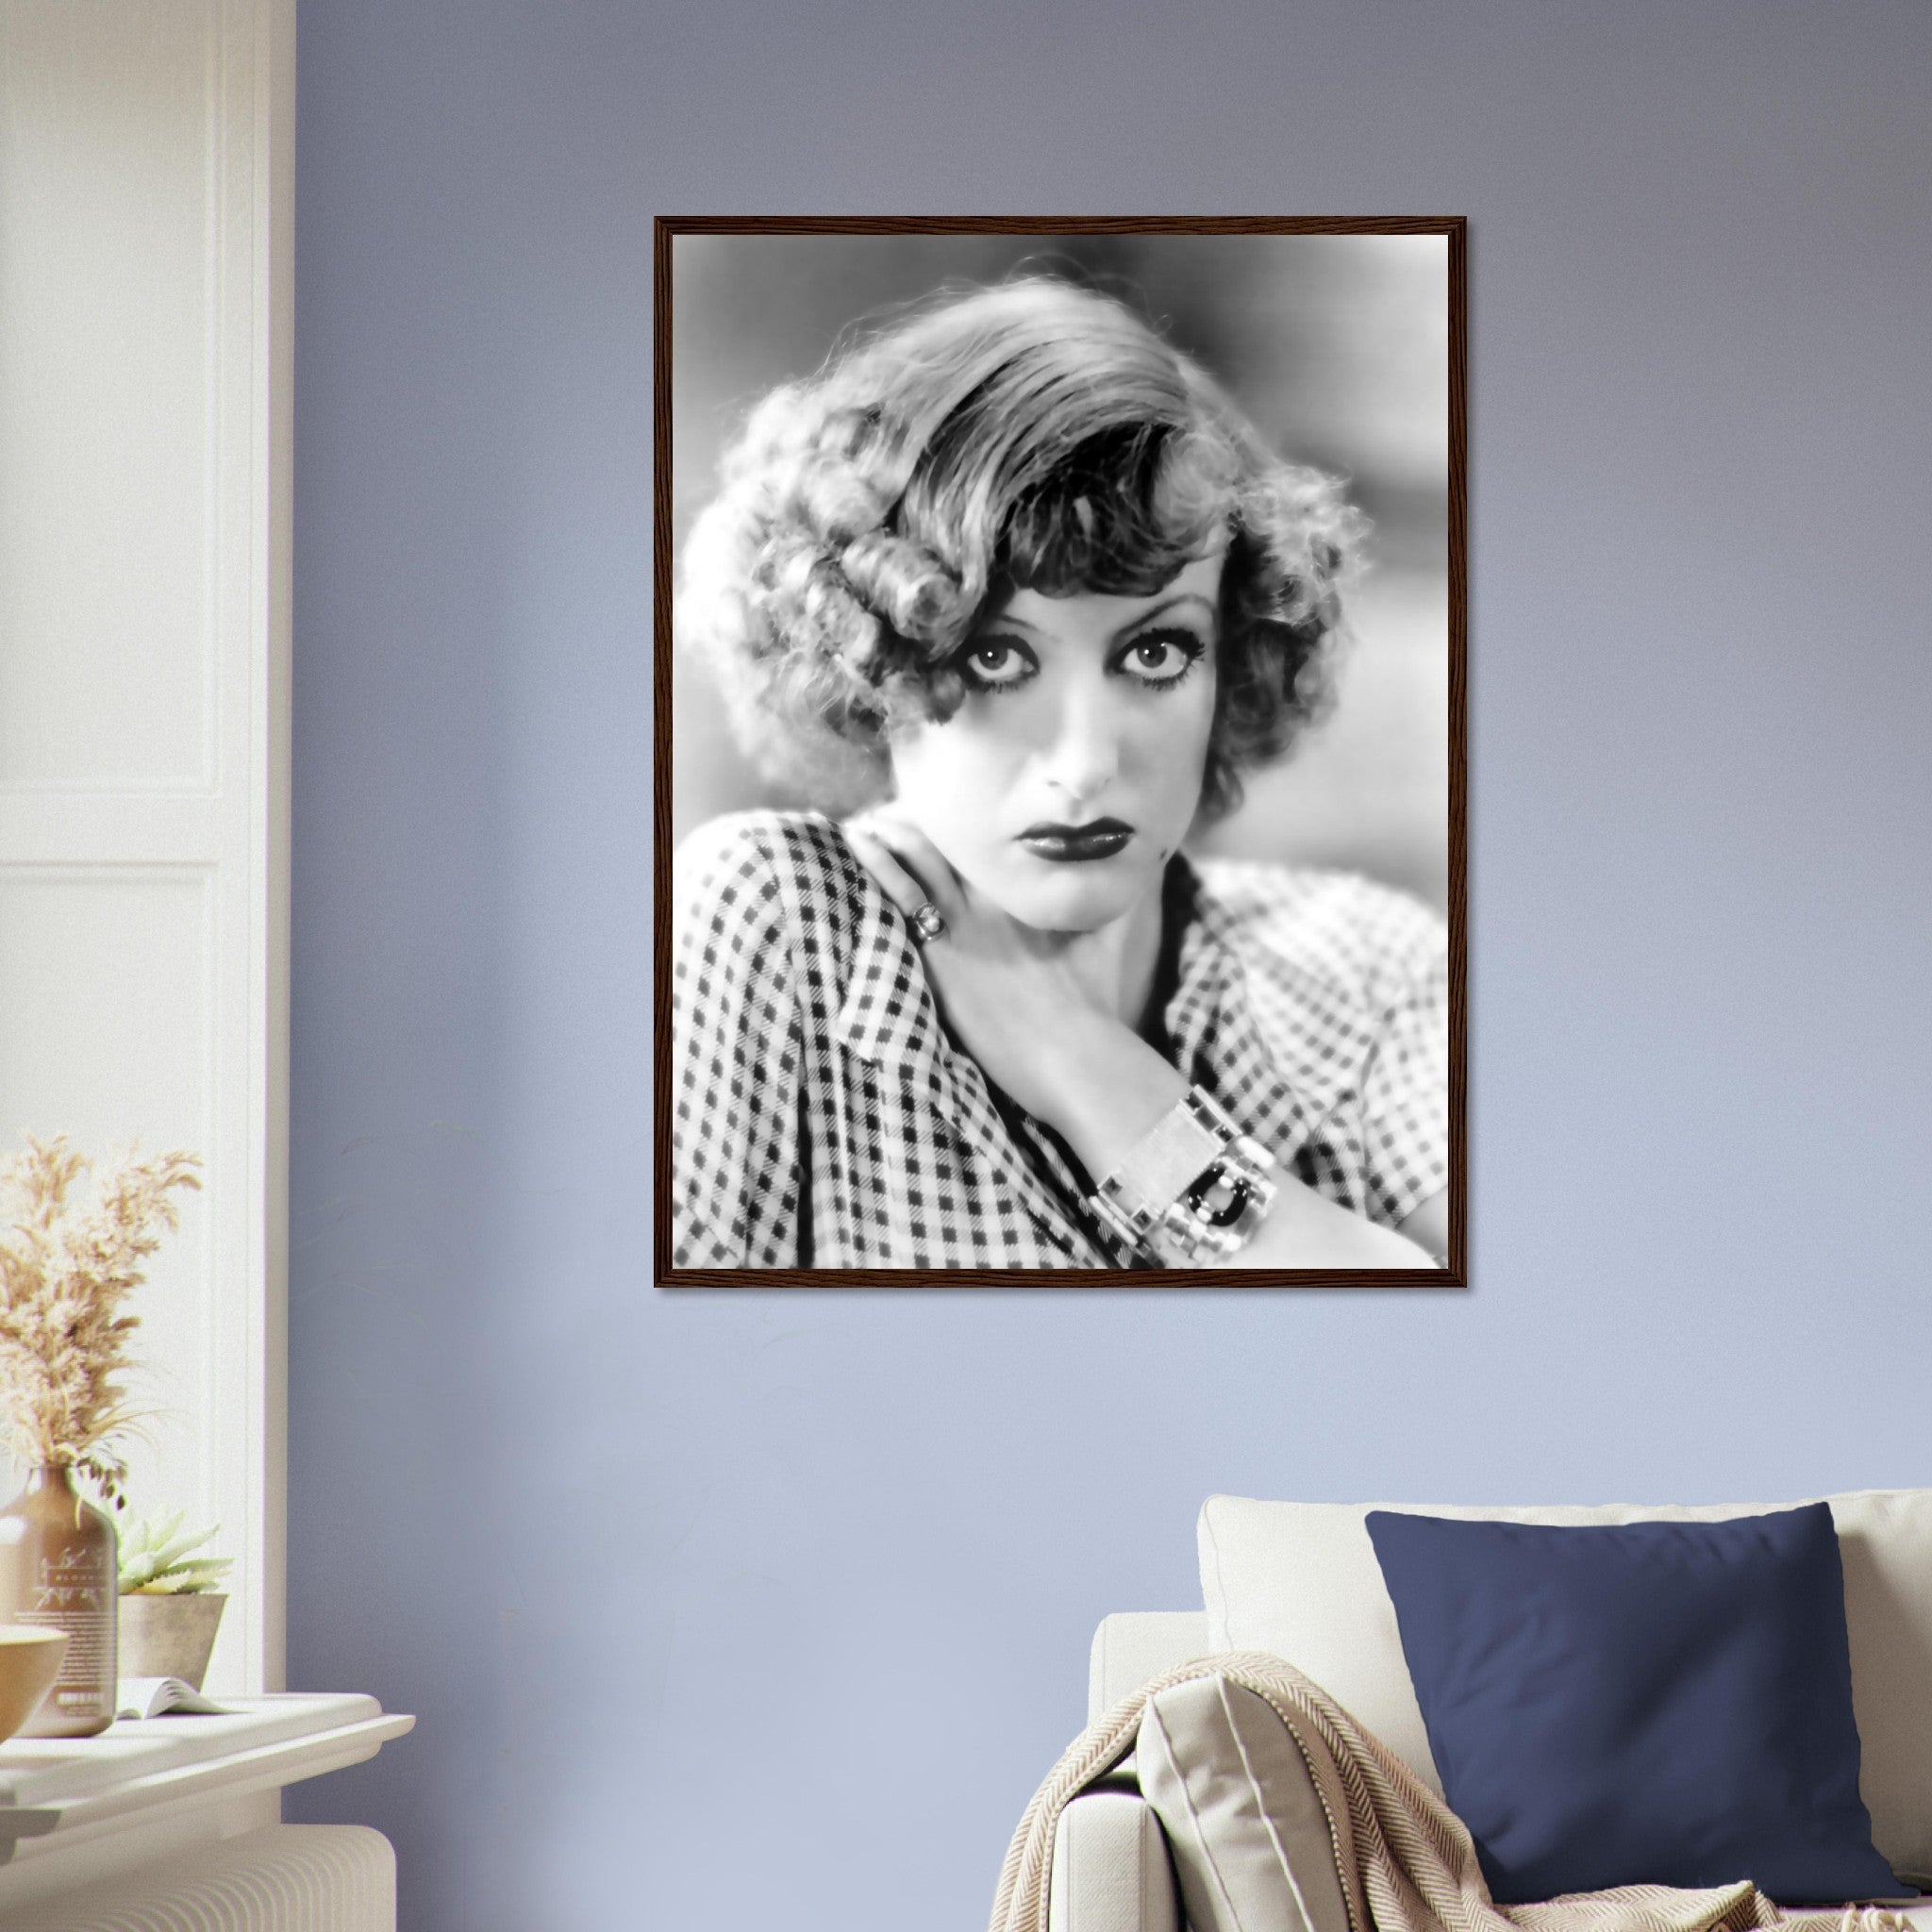 Joan Crawford Framed, Baby Jane Star, Vintage Photo - Iconic Joan Crawford Framed Print - Hollywood Silver Screen Star - WallArtPrints4U